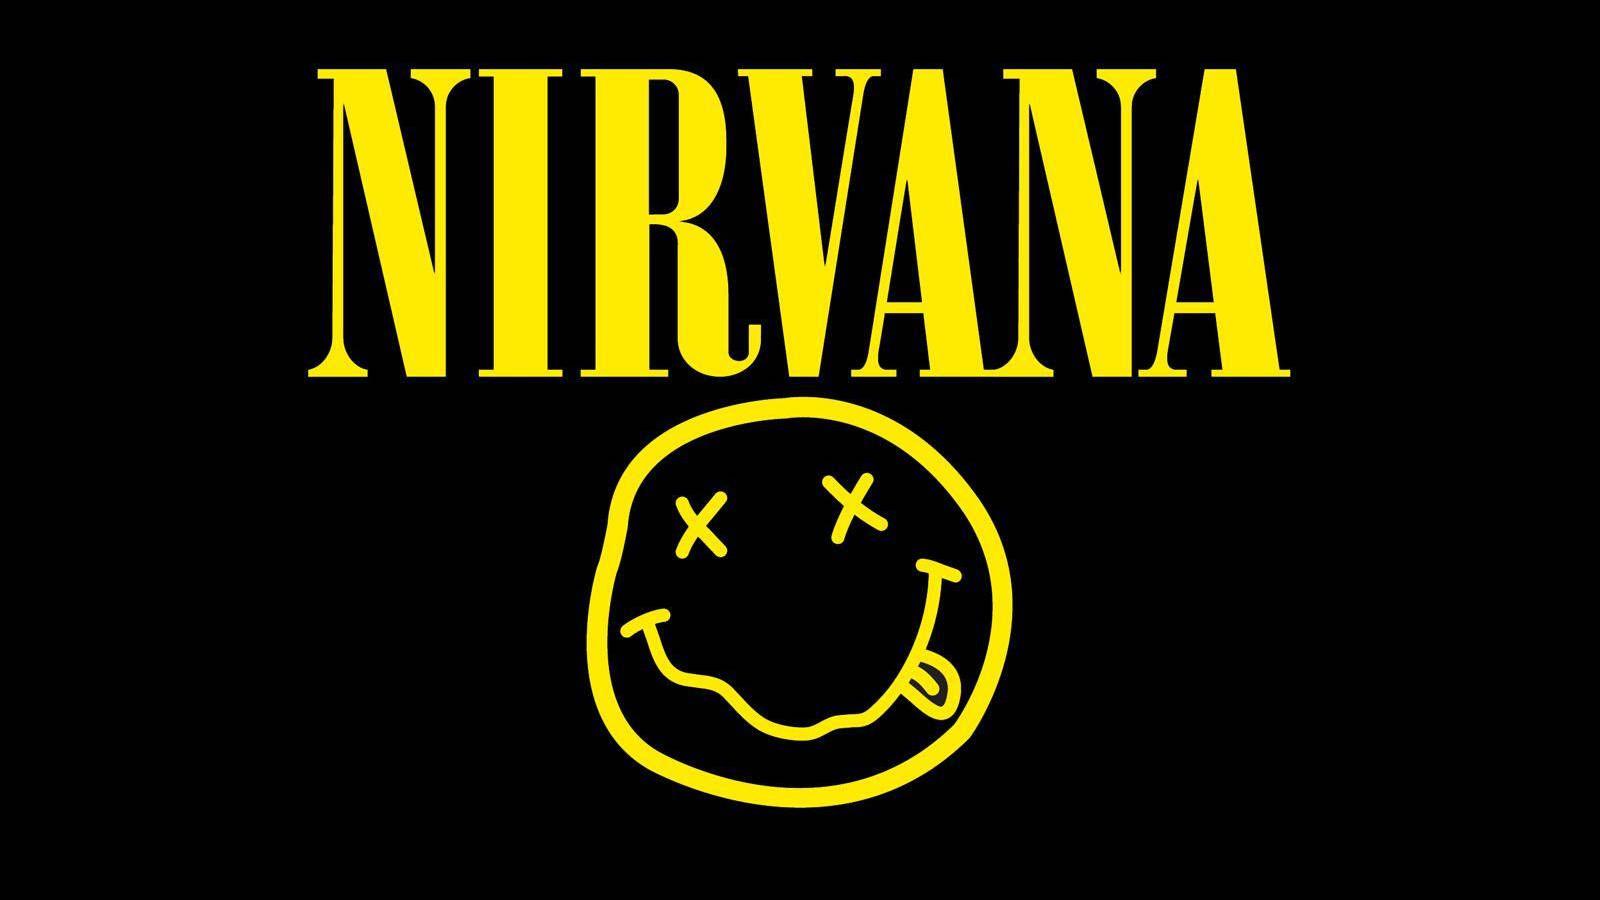 Nirvana Smiley Face Logo - What Does The Nirvana Smiley Face Logo Mean? - Radio X